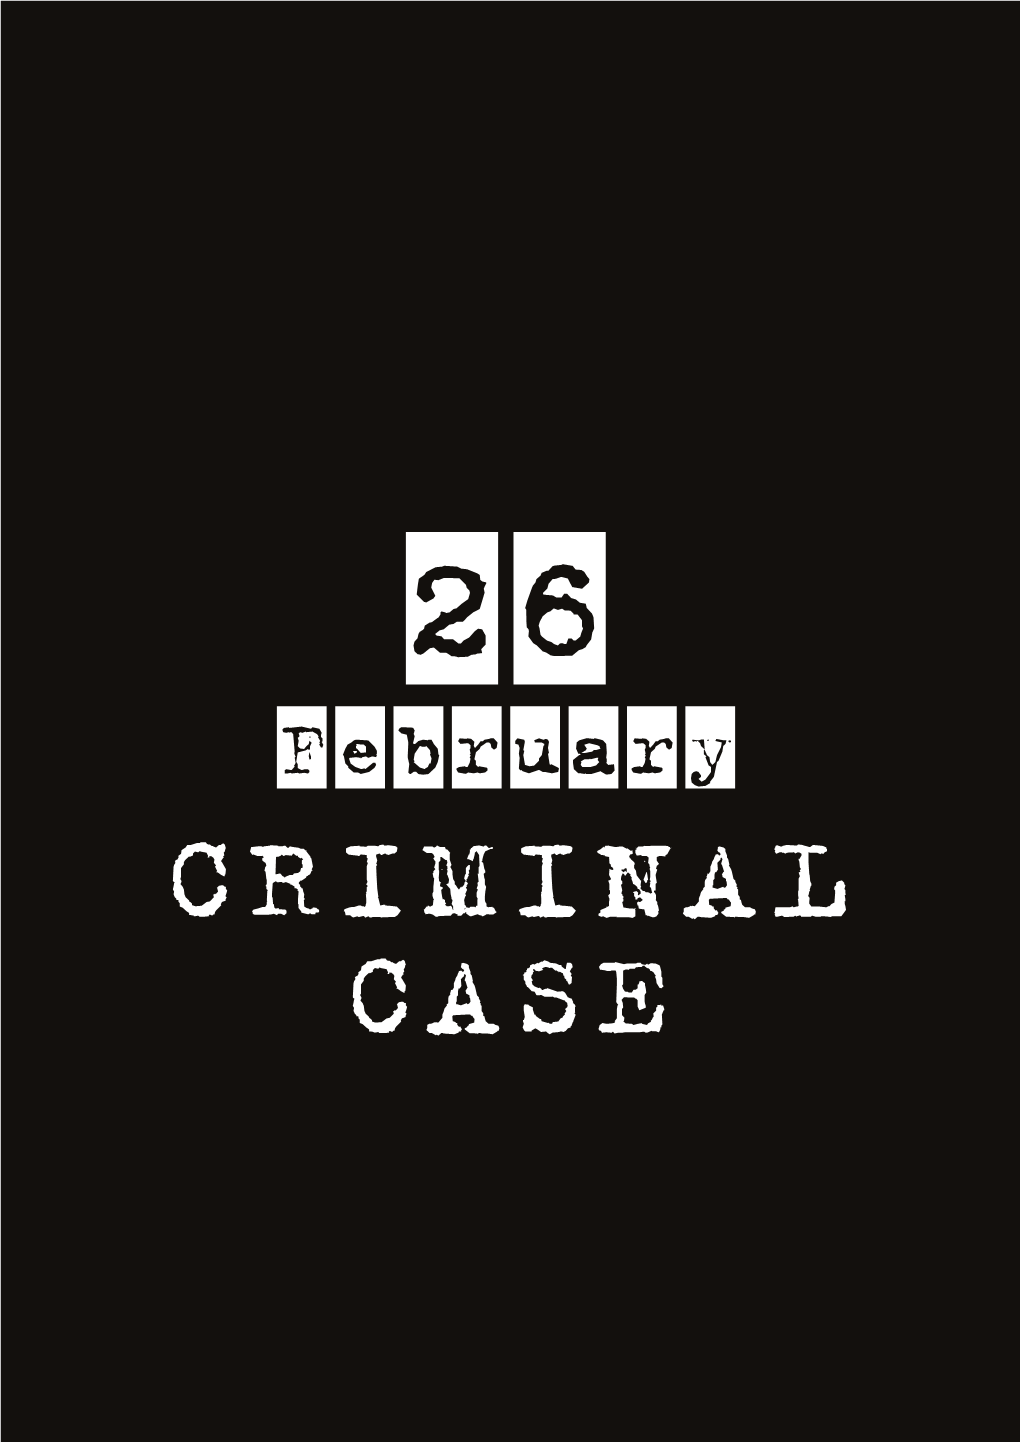 26 February Criminal Case”. Part 1